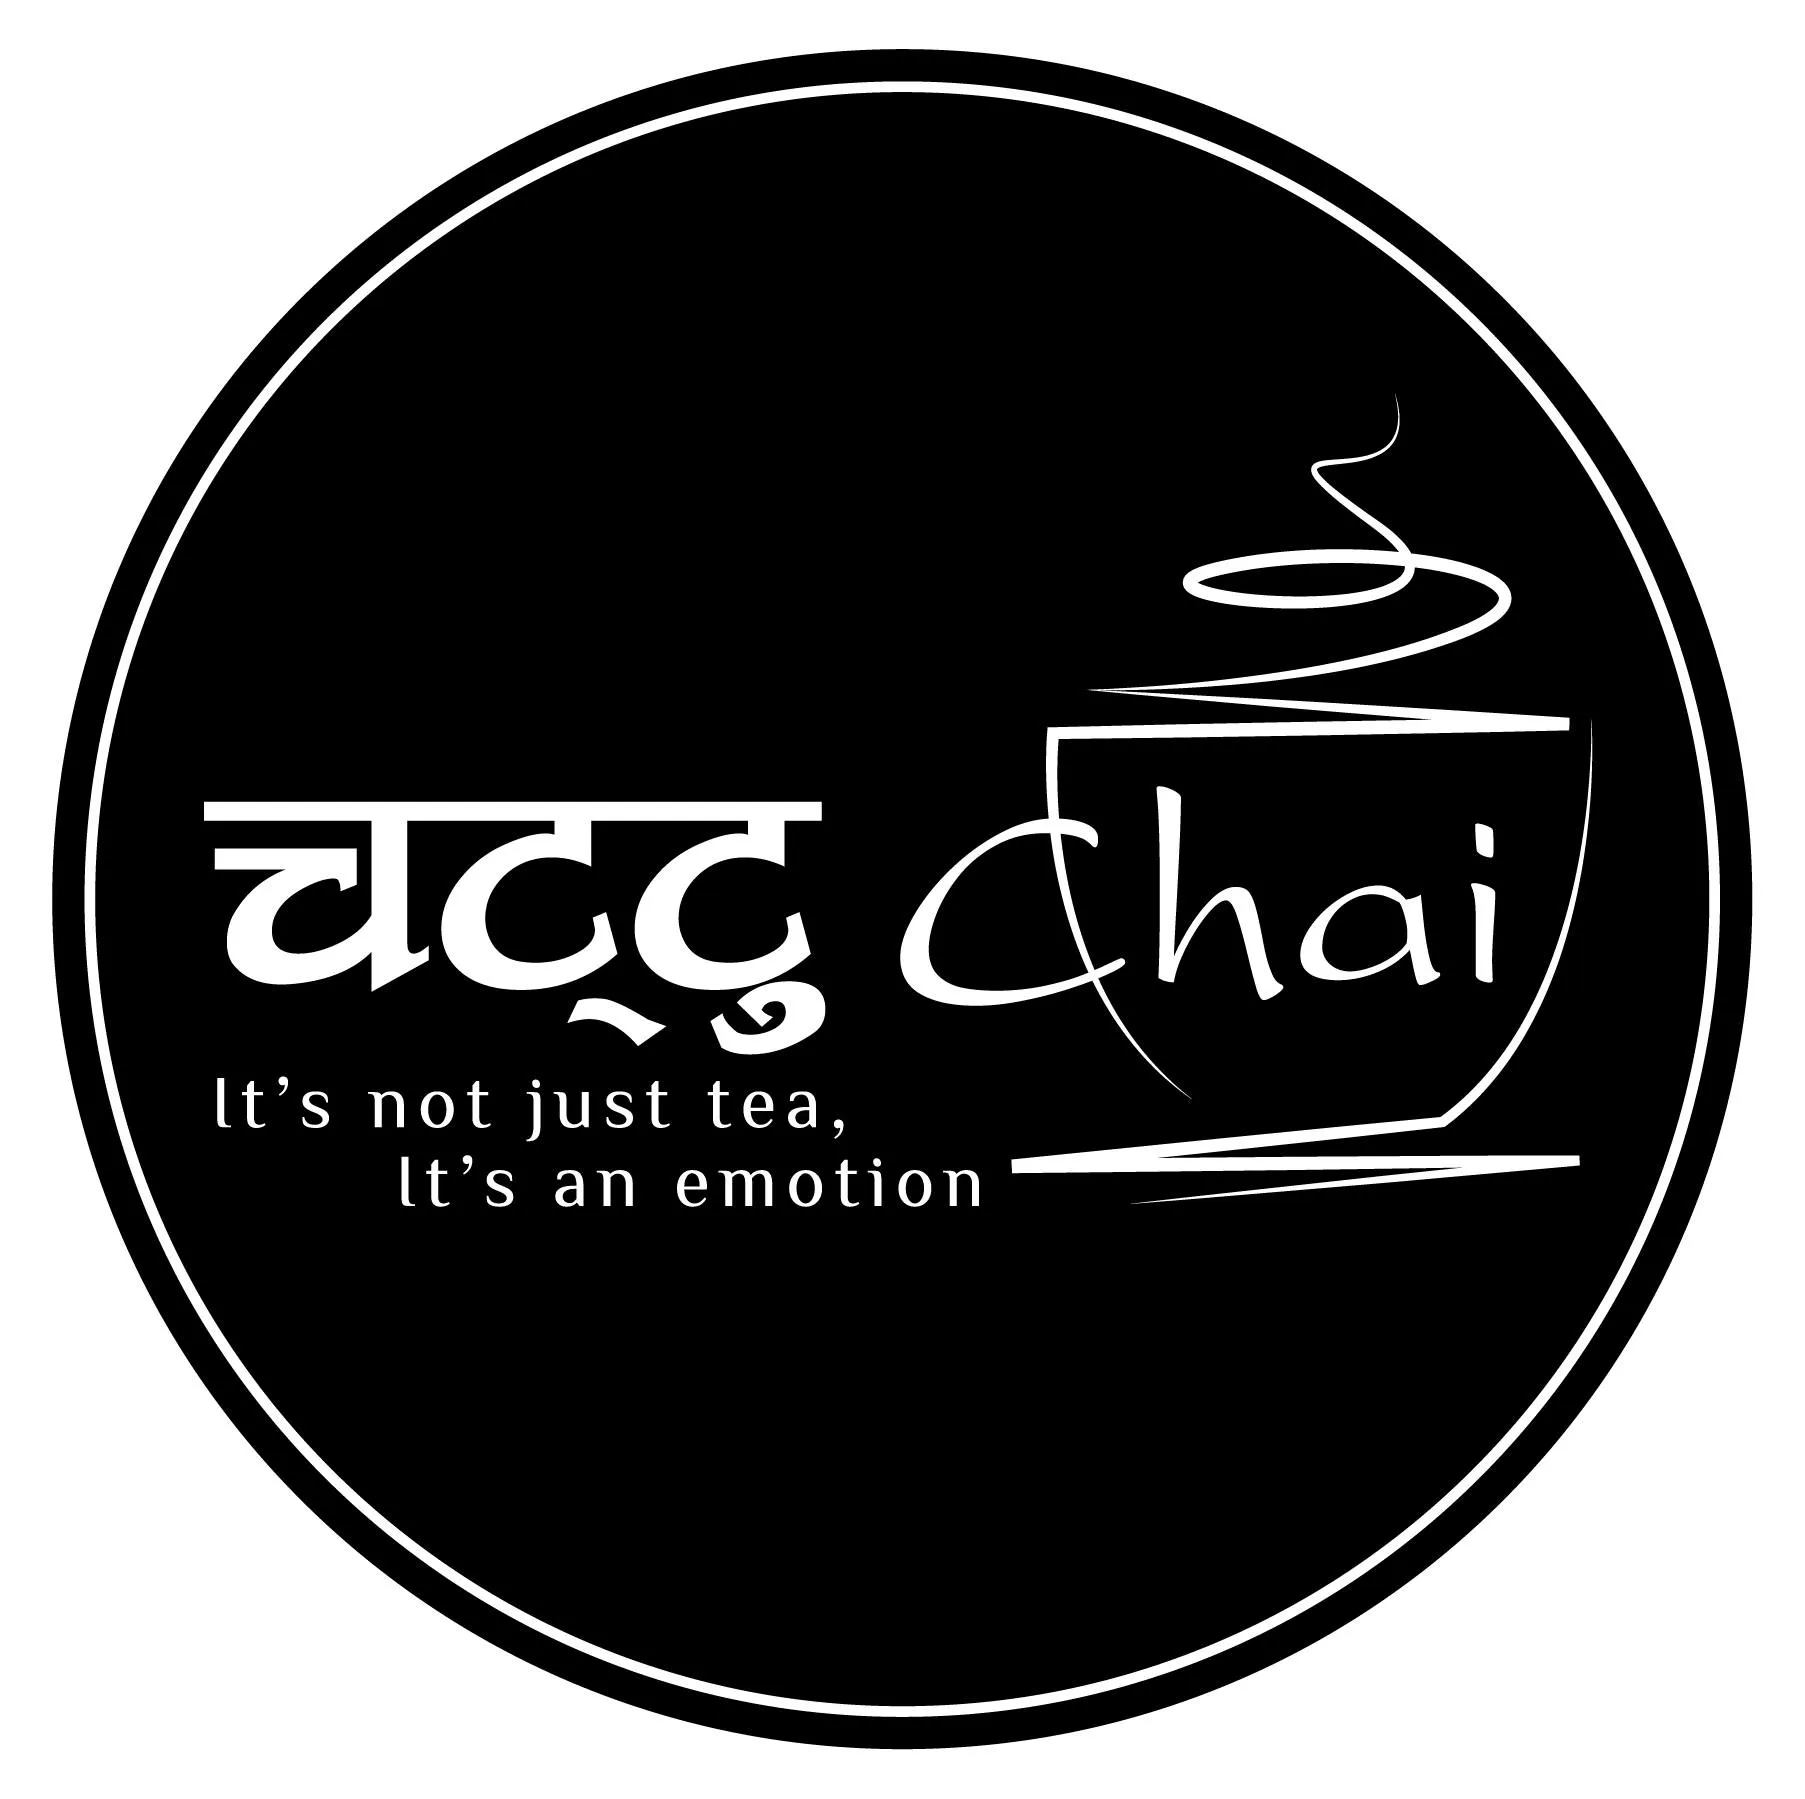 chattuchai